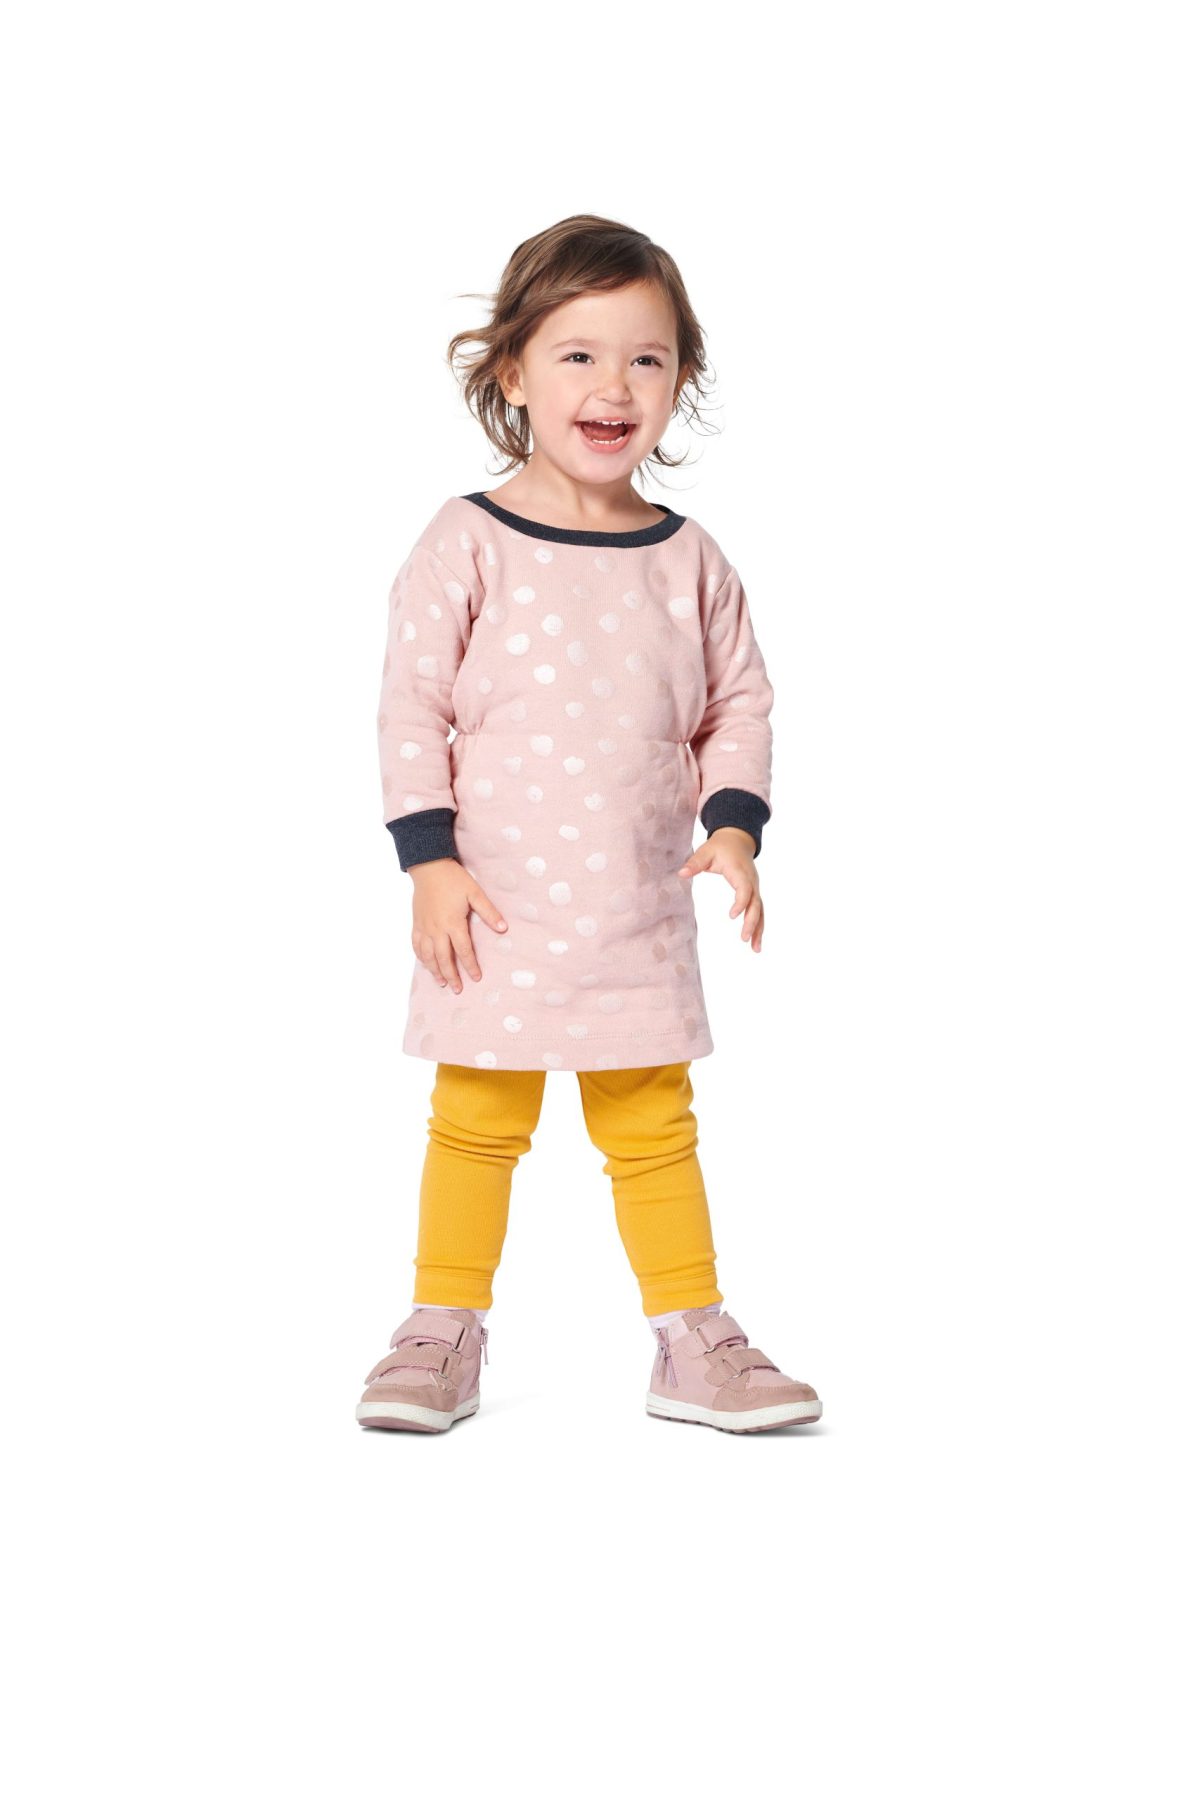 Burda Style Pattern 9273 Babies' Top and Dress